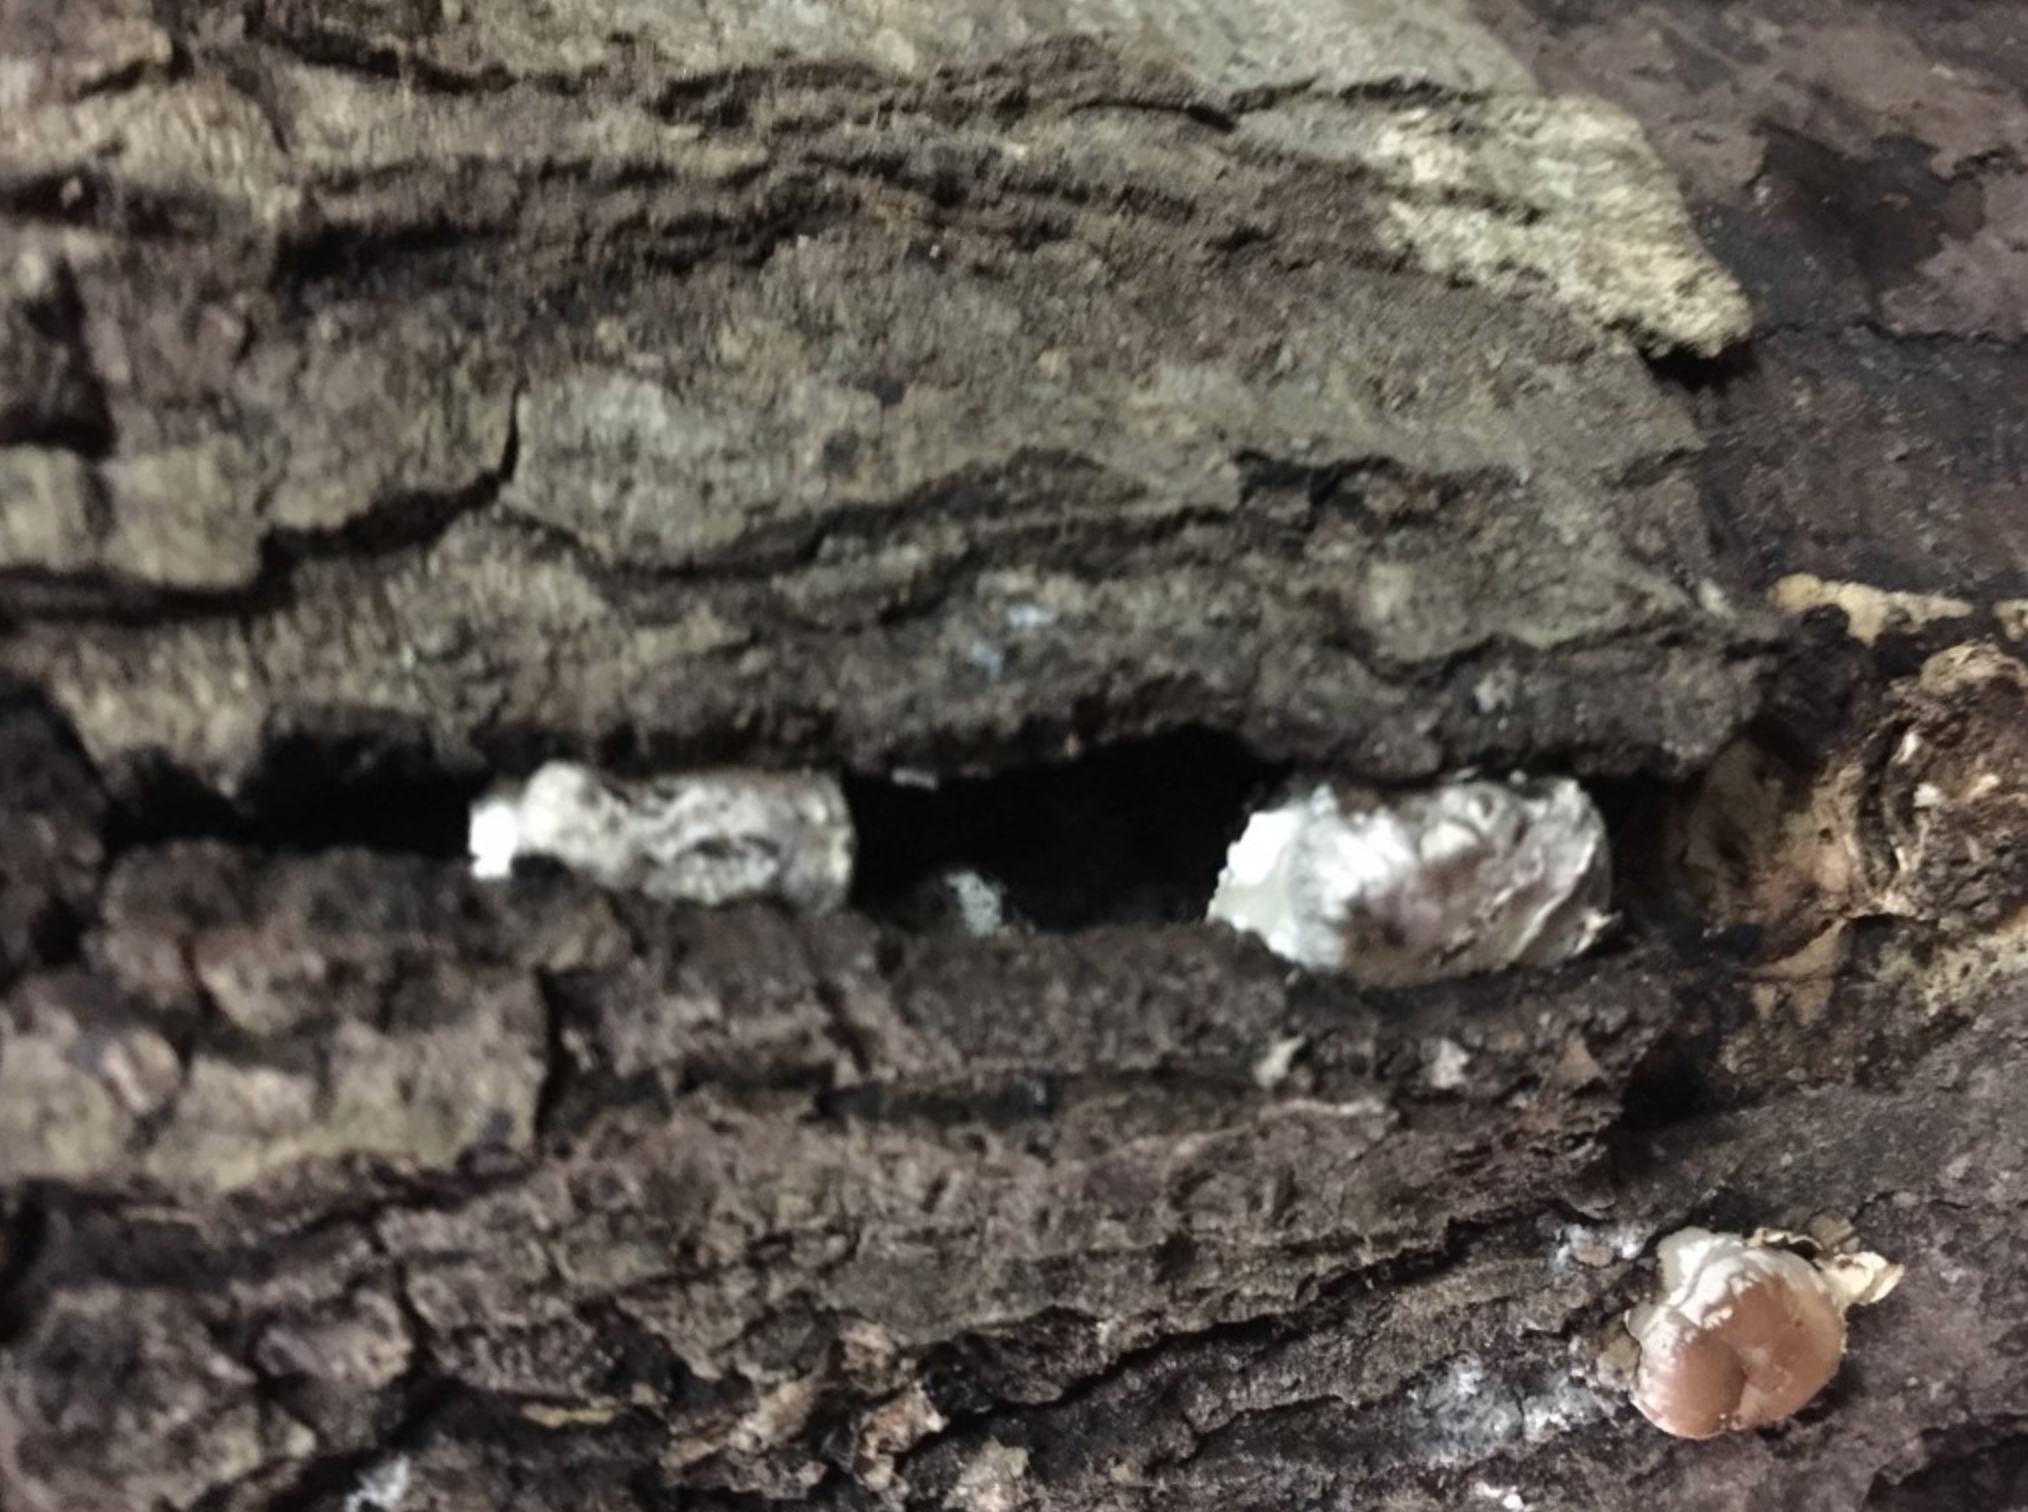 What does “pinning” look like on my mushroom log?